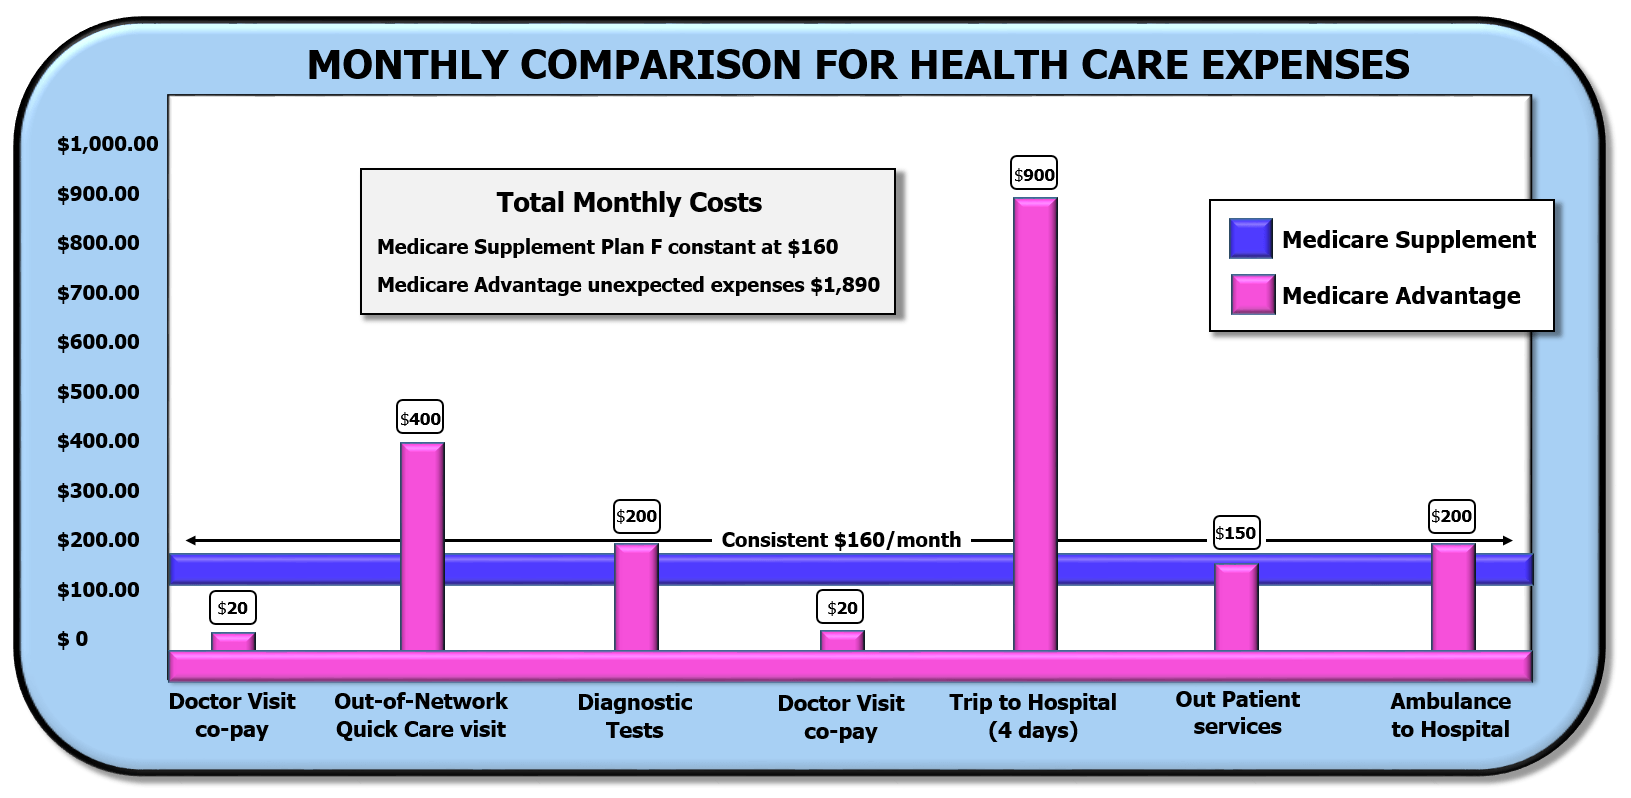 Medicare Supplement vs. Medicare Advantage graph